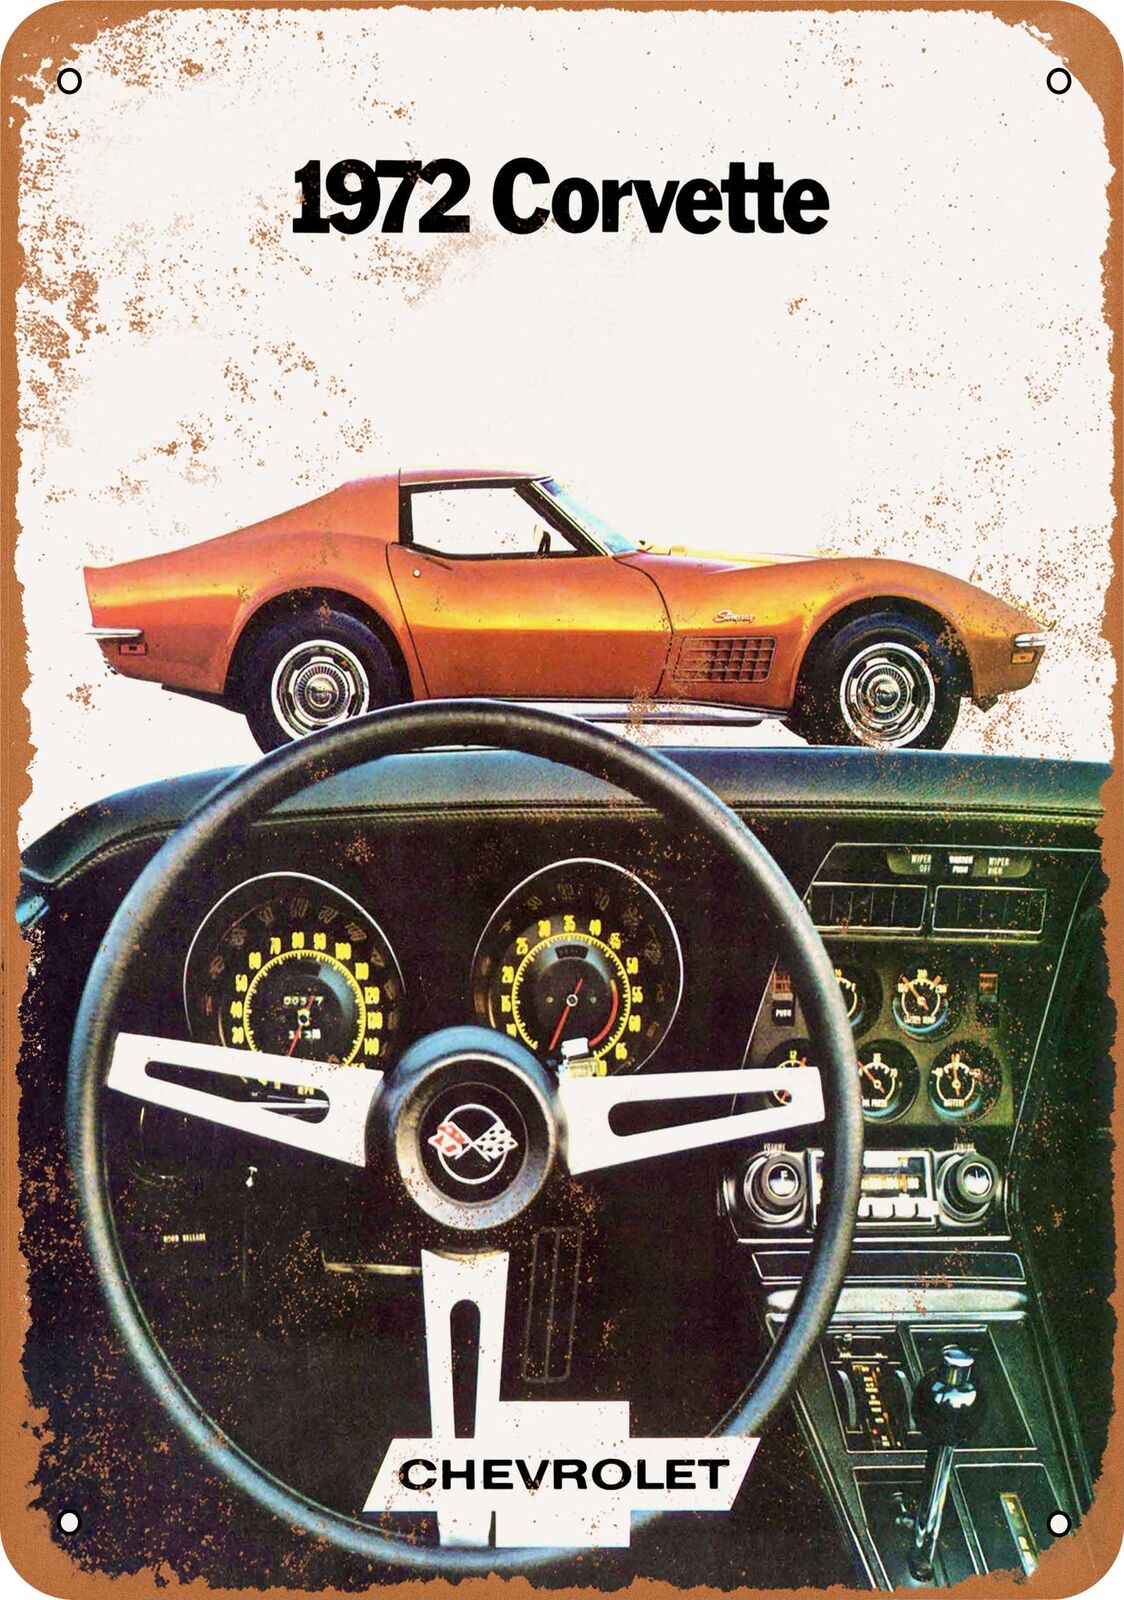 Metal Sign - 1972 Chevrolet Corvette - Vintage Look Reproduction 2